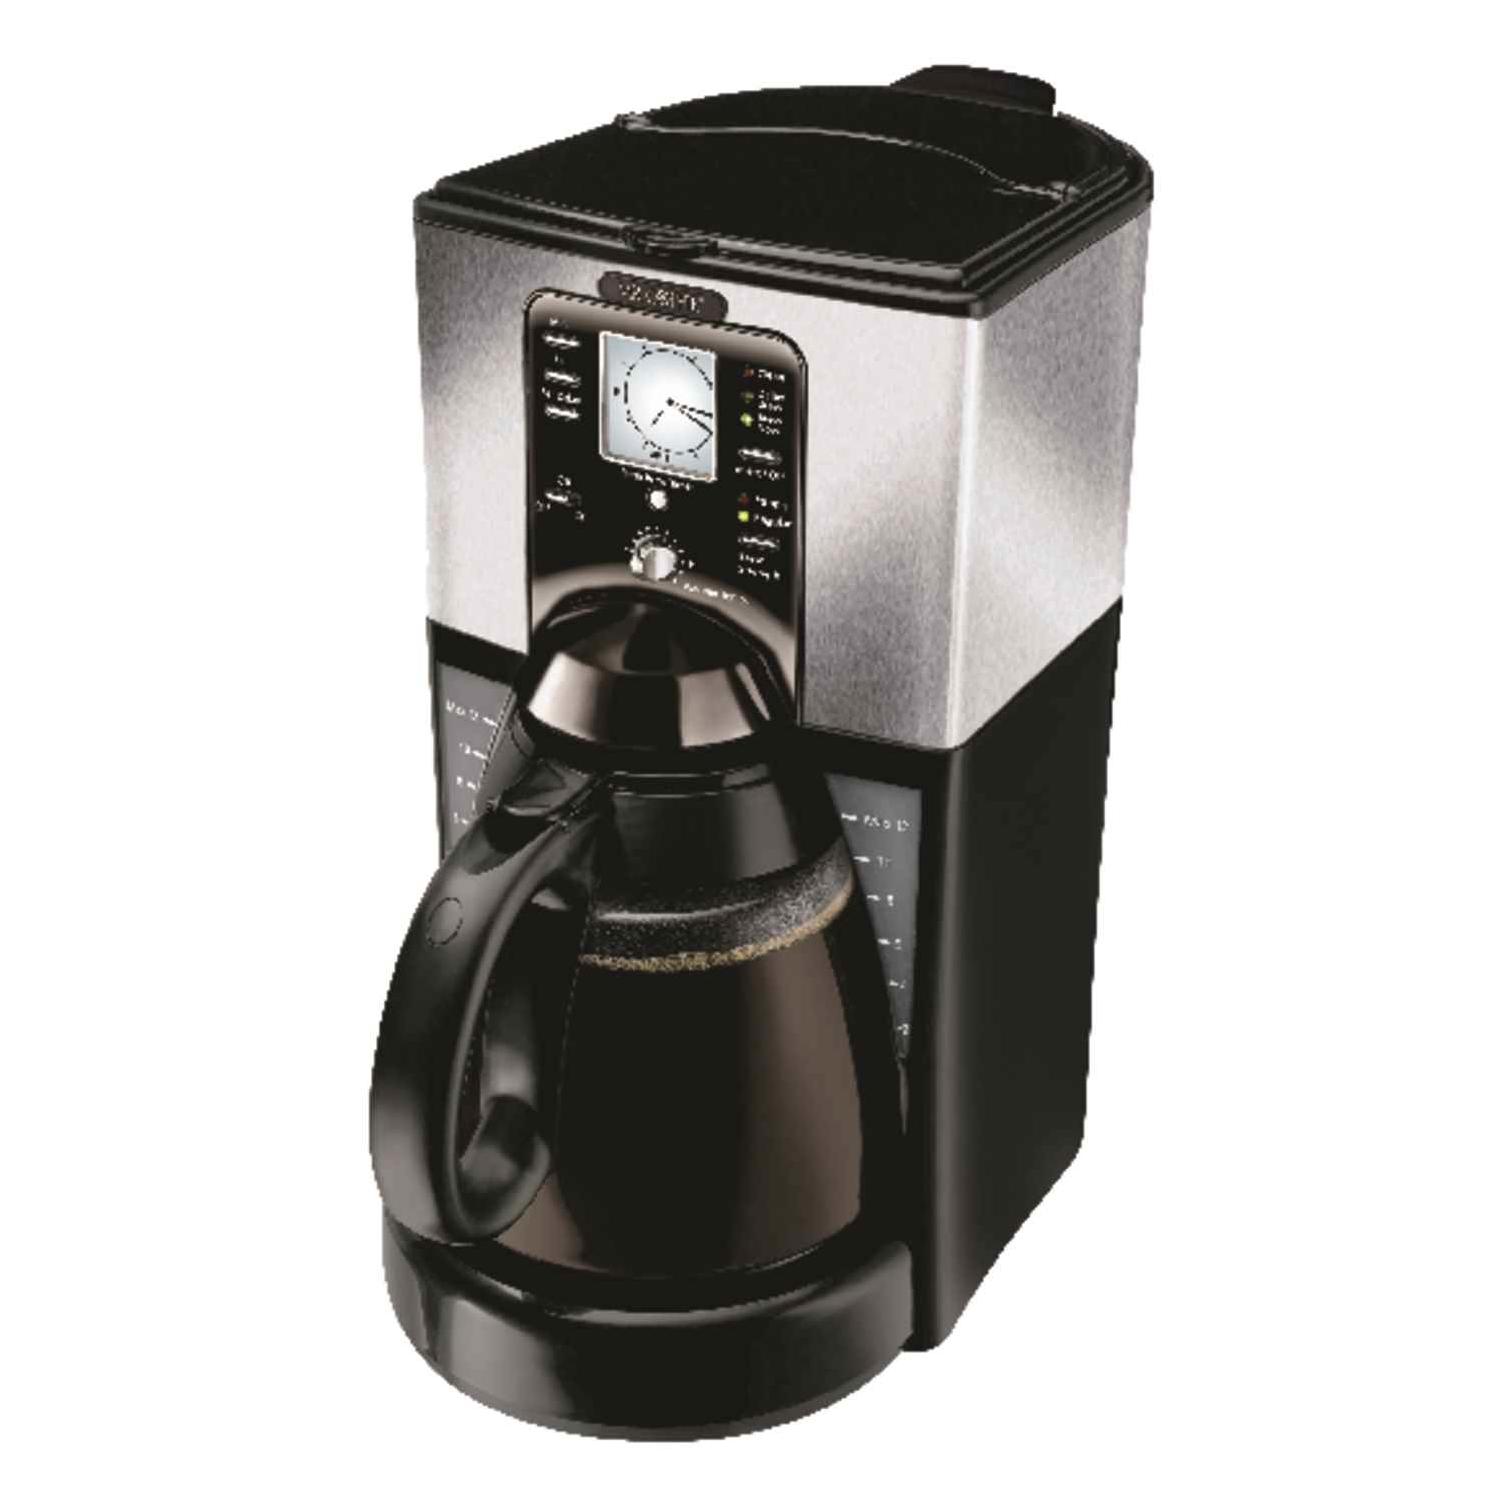 Mr. Coffee Mr Coffee 12-Cup Programmable Black Coffee Maker